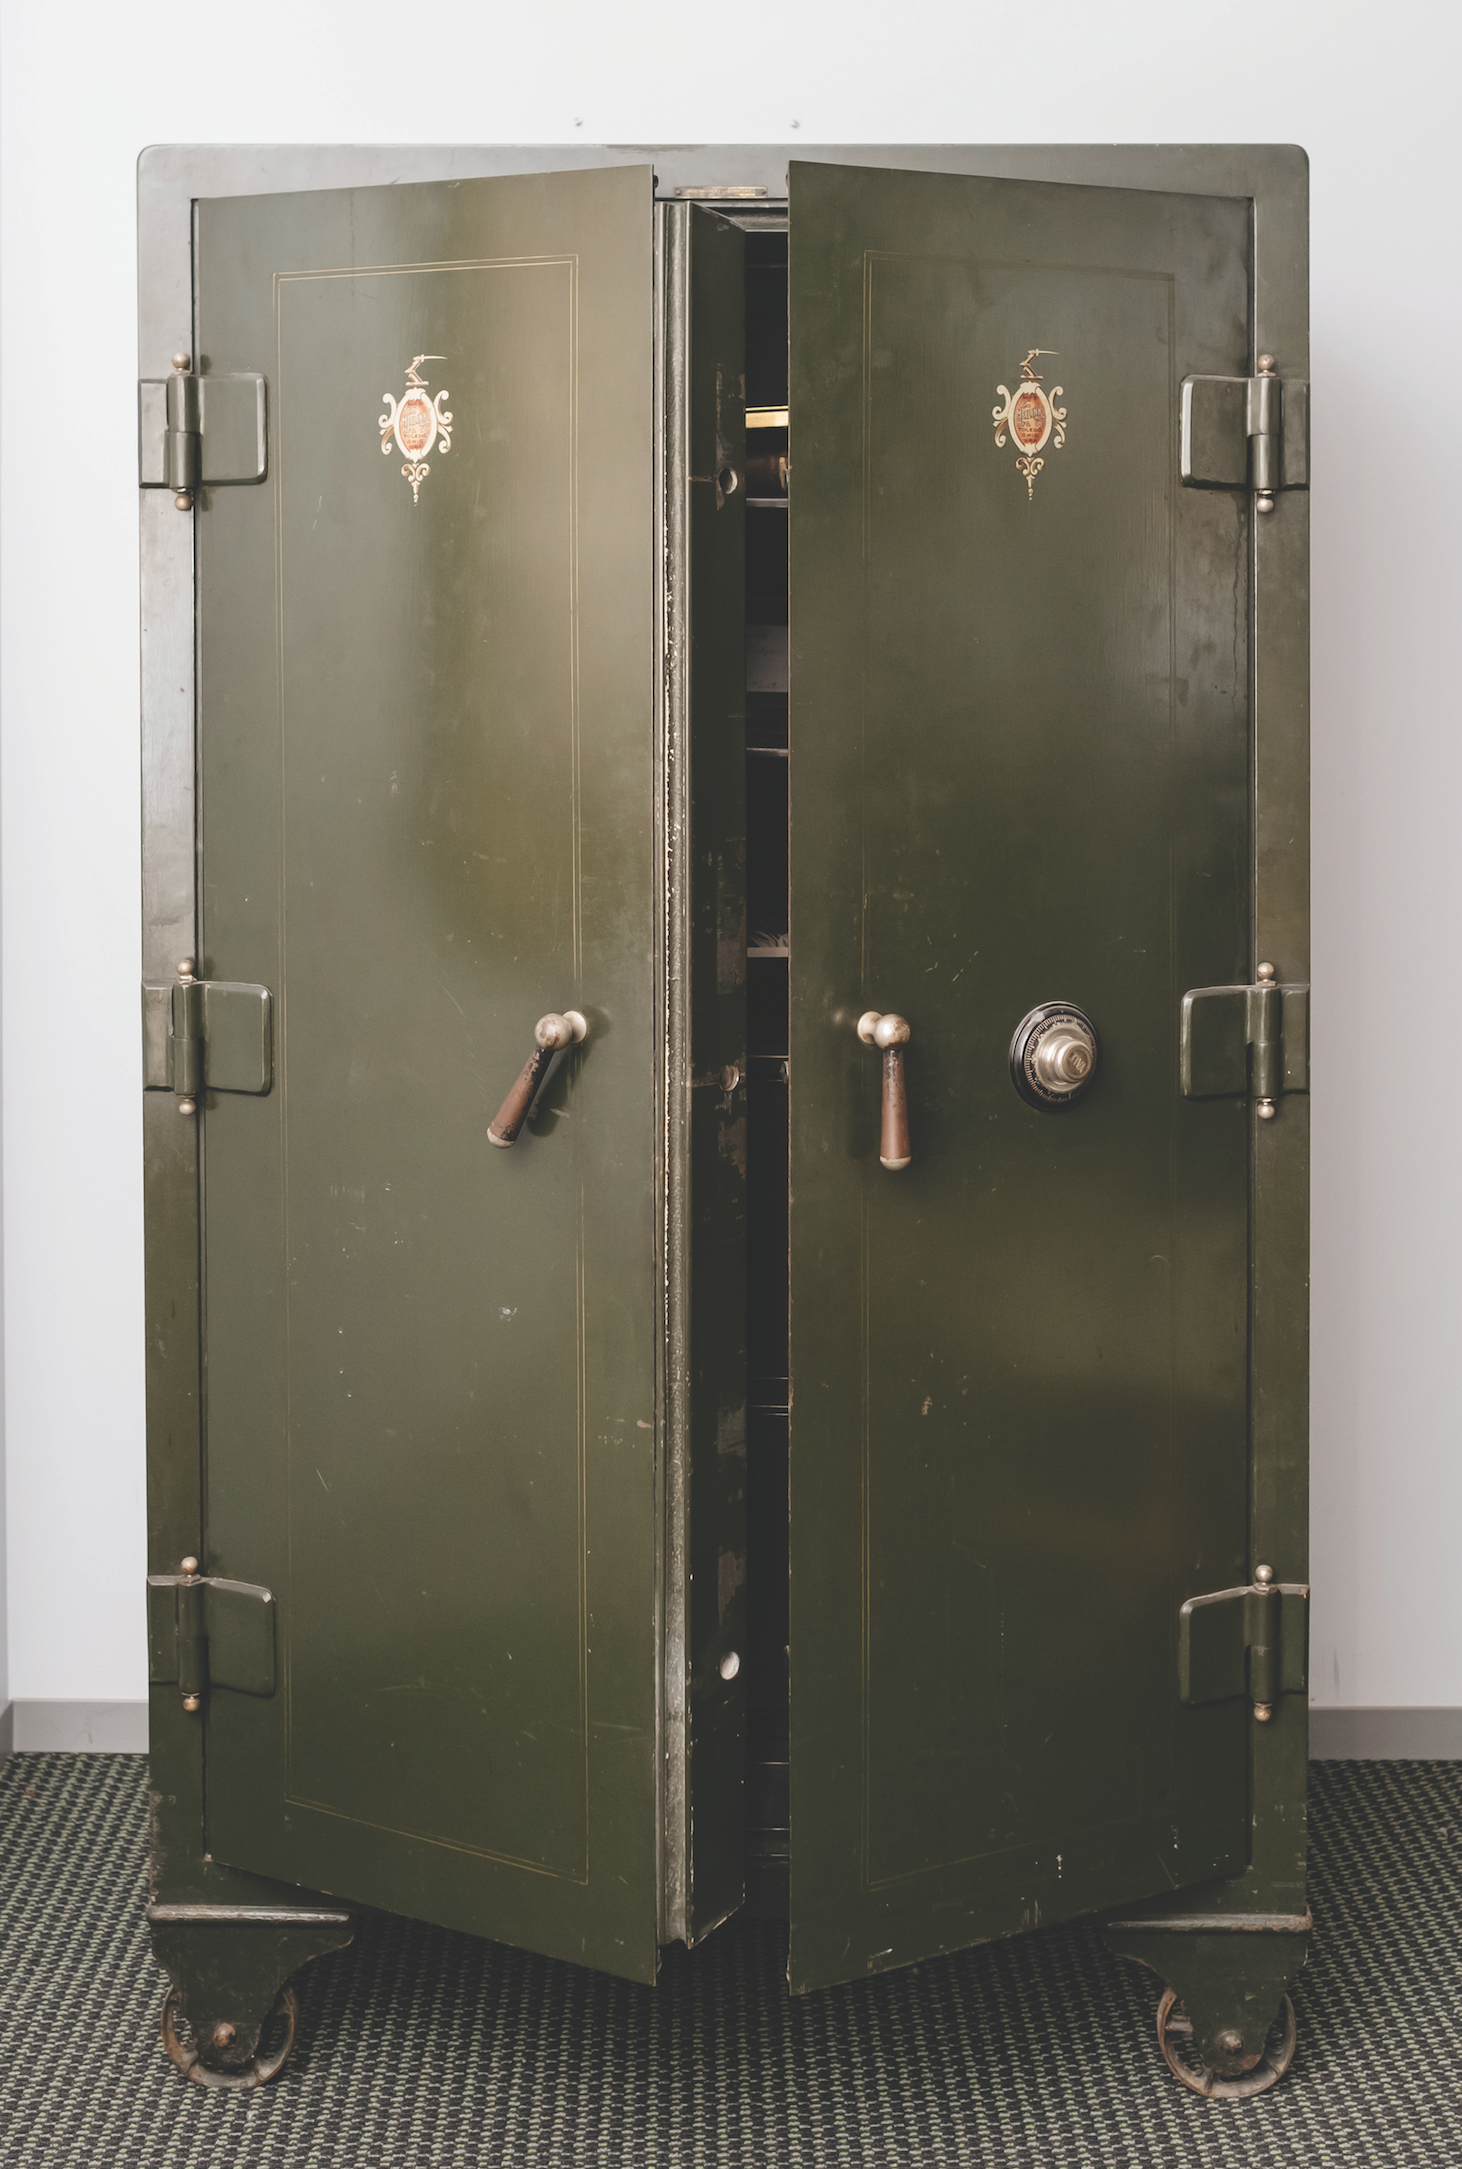 A safe owned by Swedish poet Carl Sandburg.